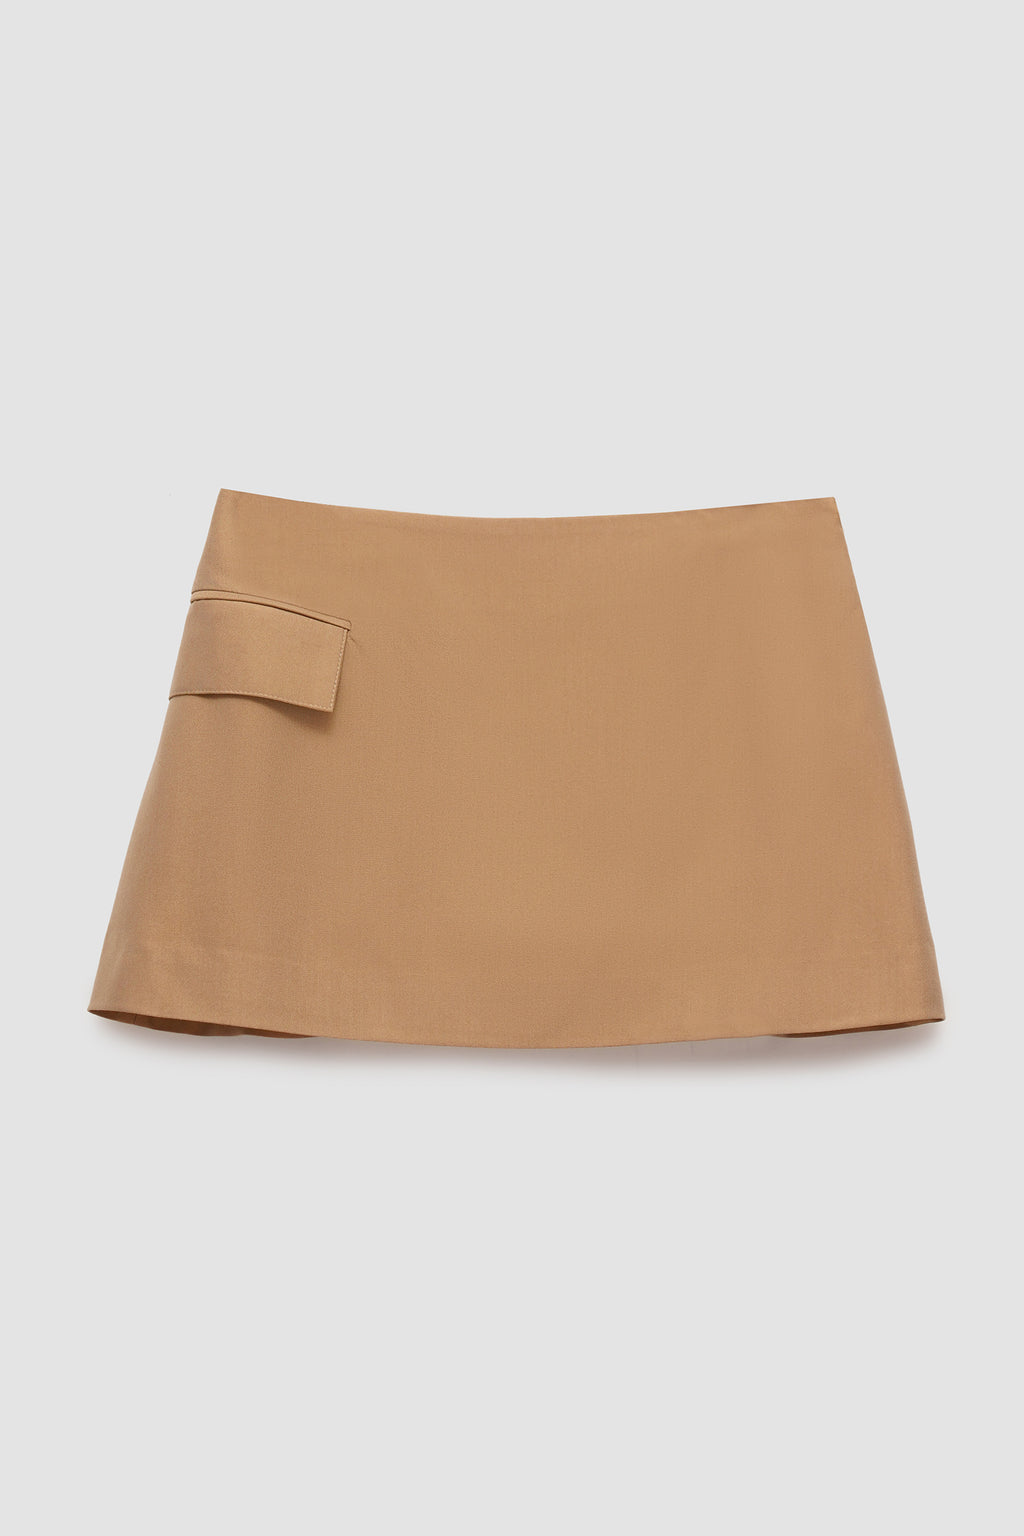 'Receptionist' Wool Mini Skirt in Beige